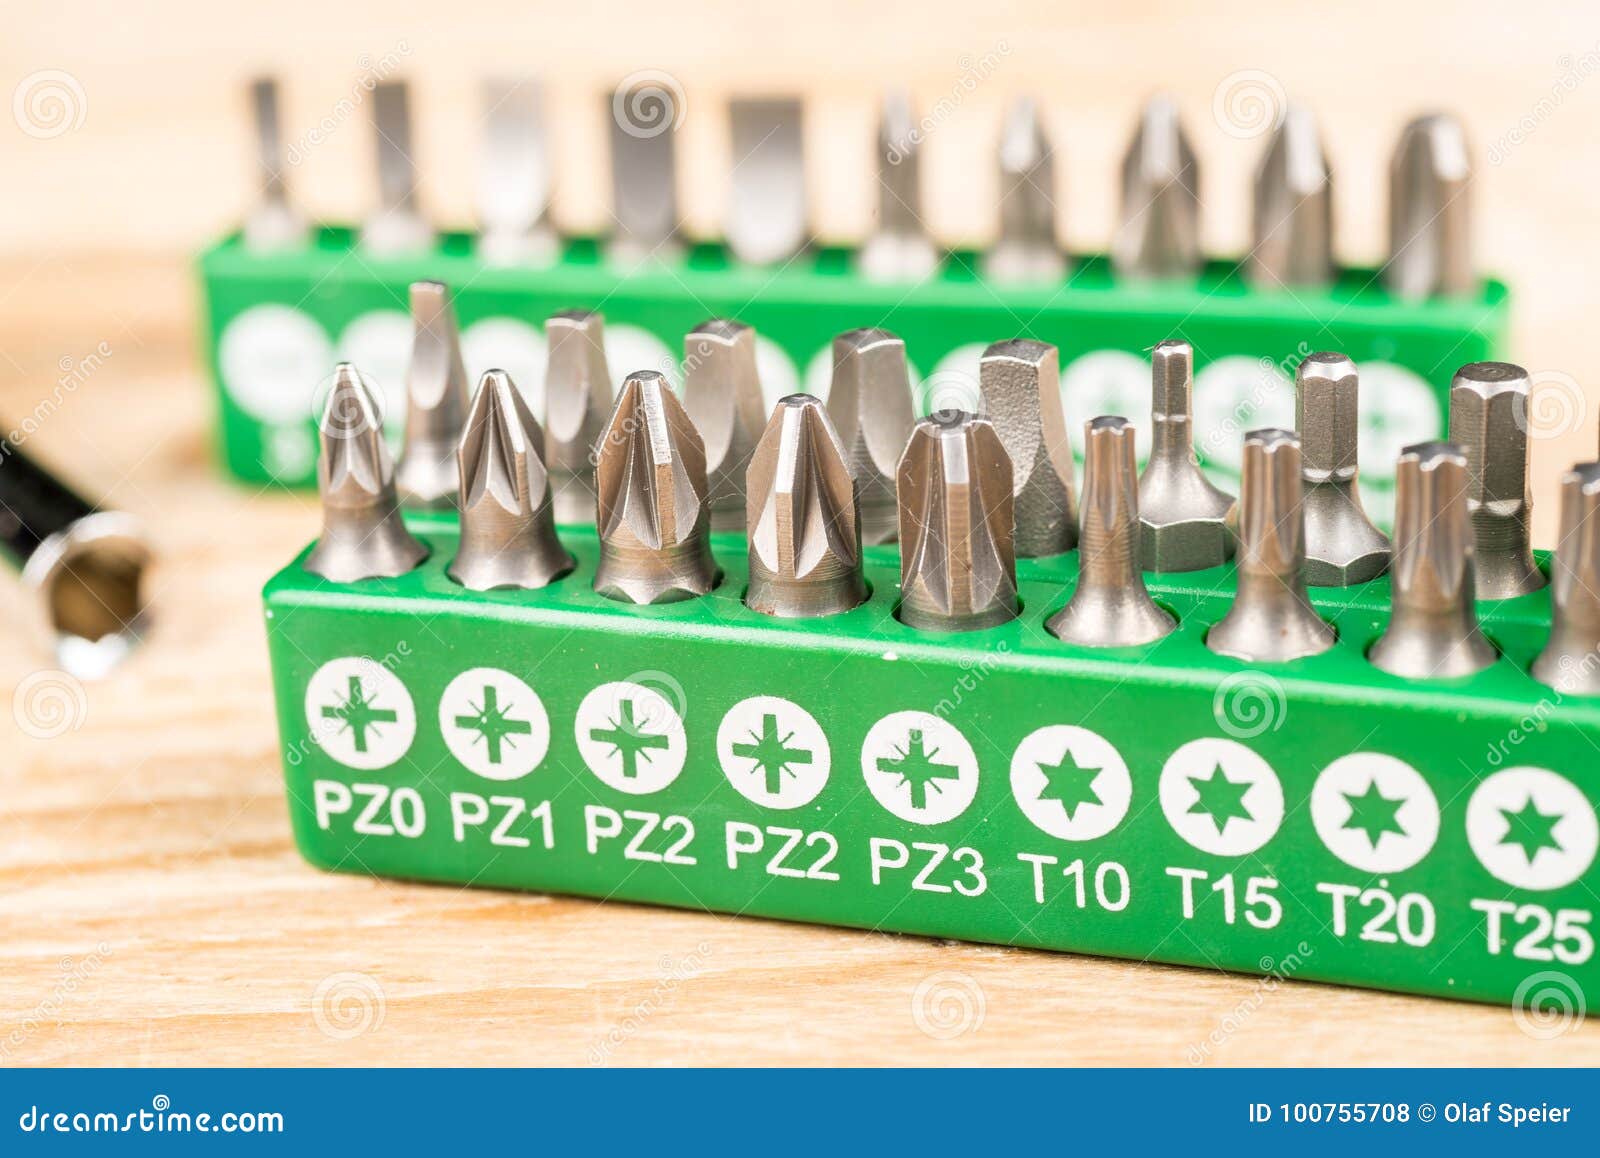 assorted screwdriver insert tips